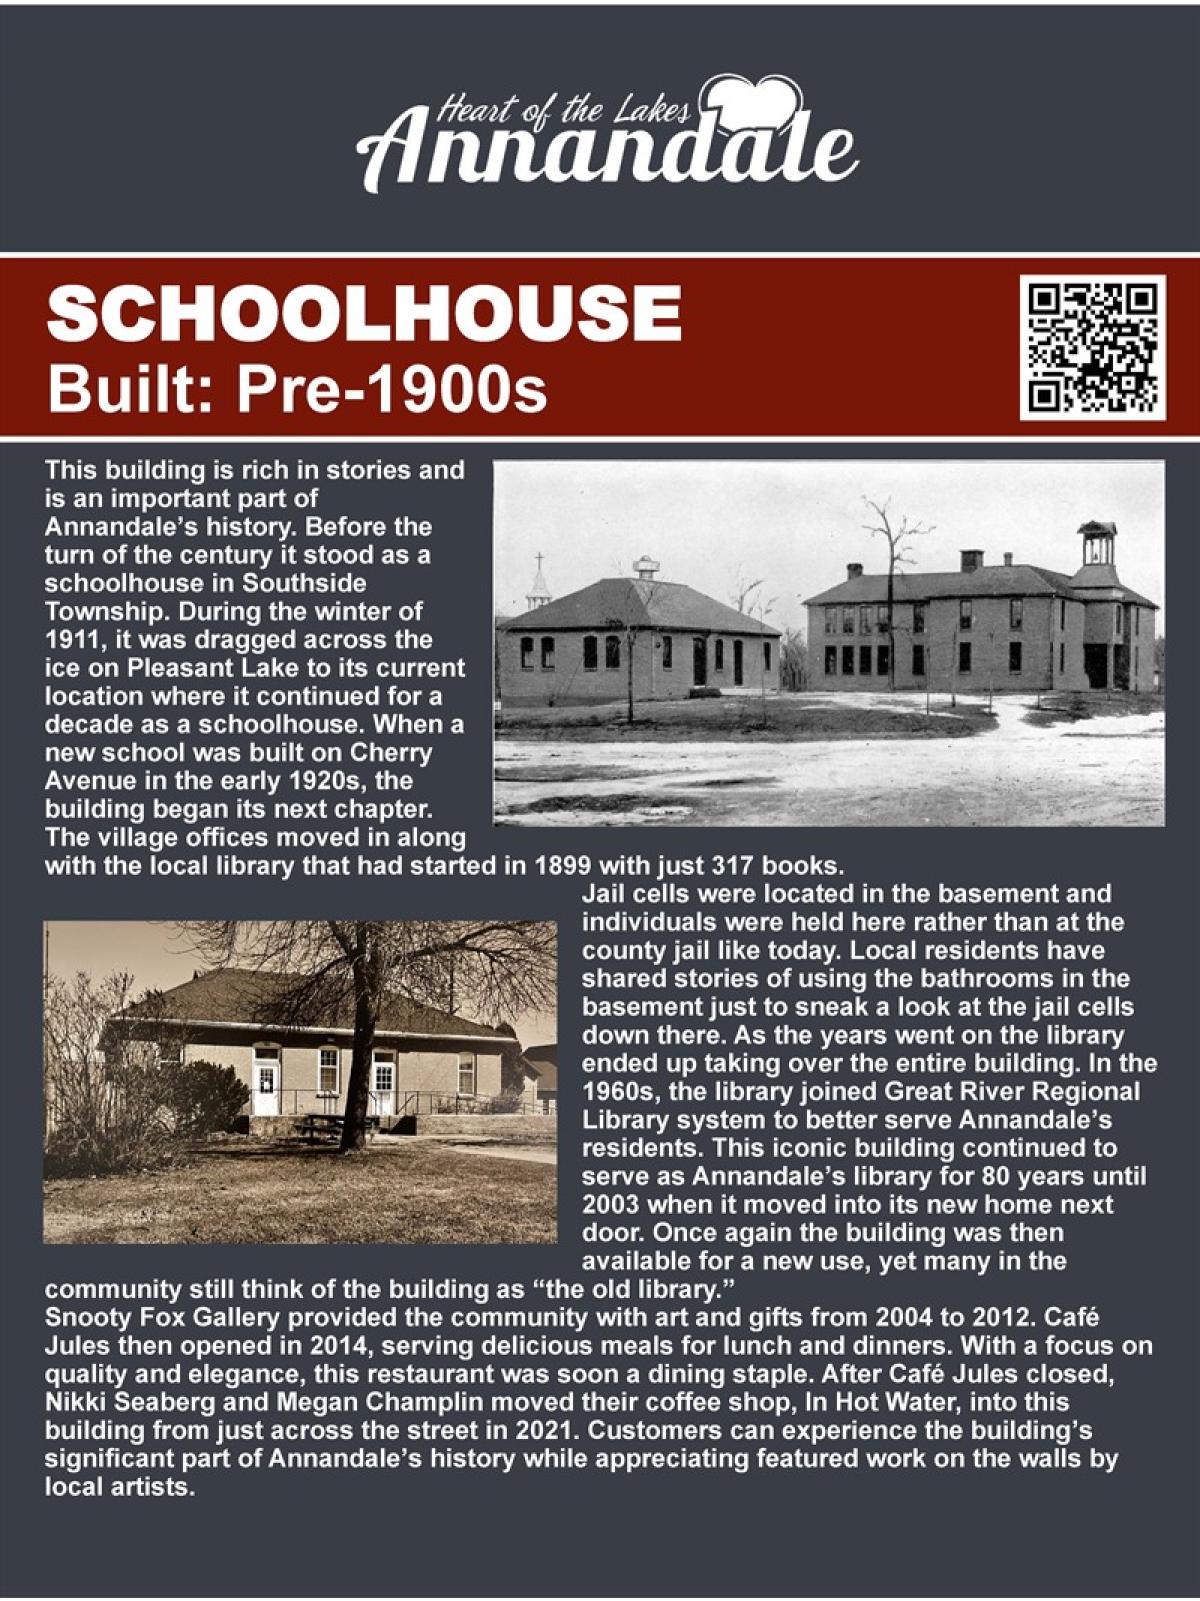 Schoolhouse walking tour information